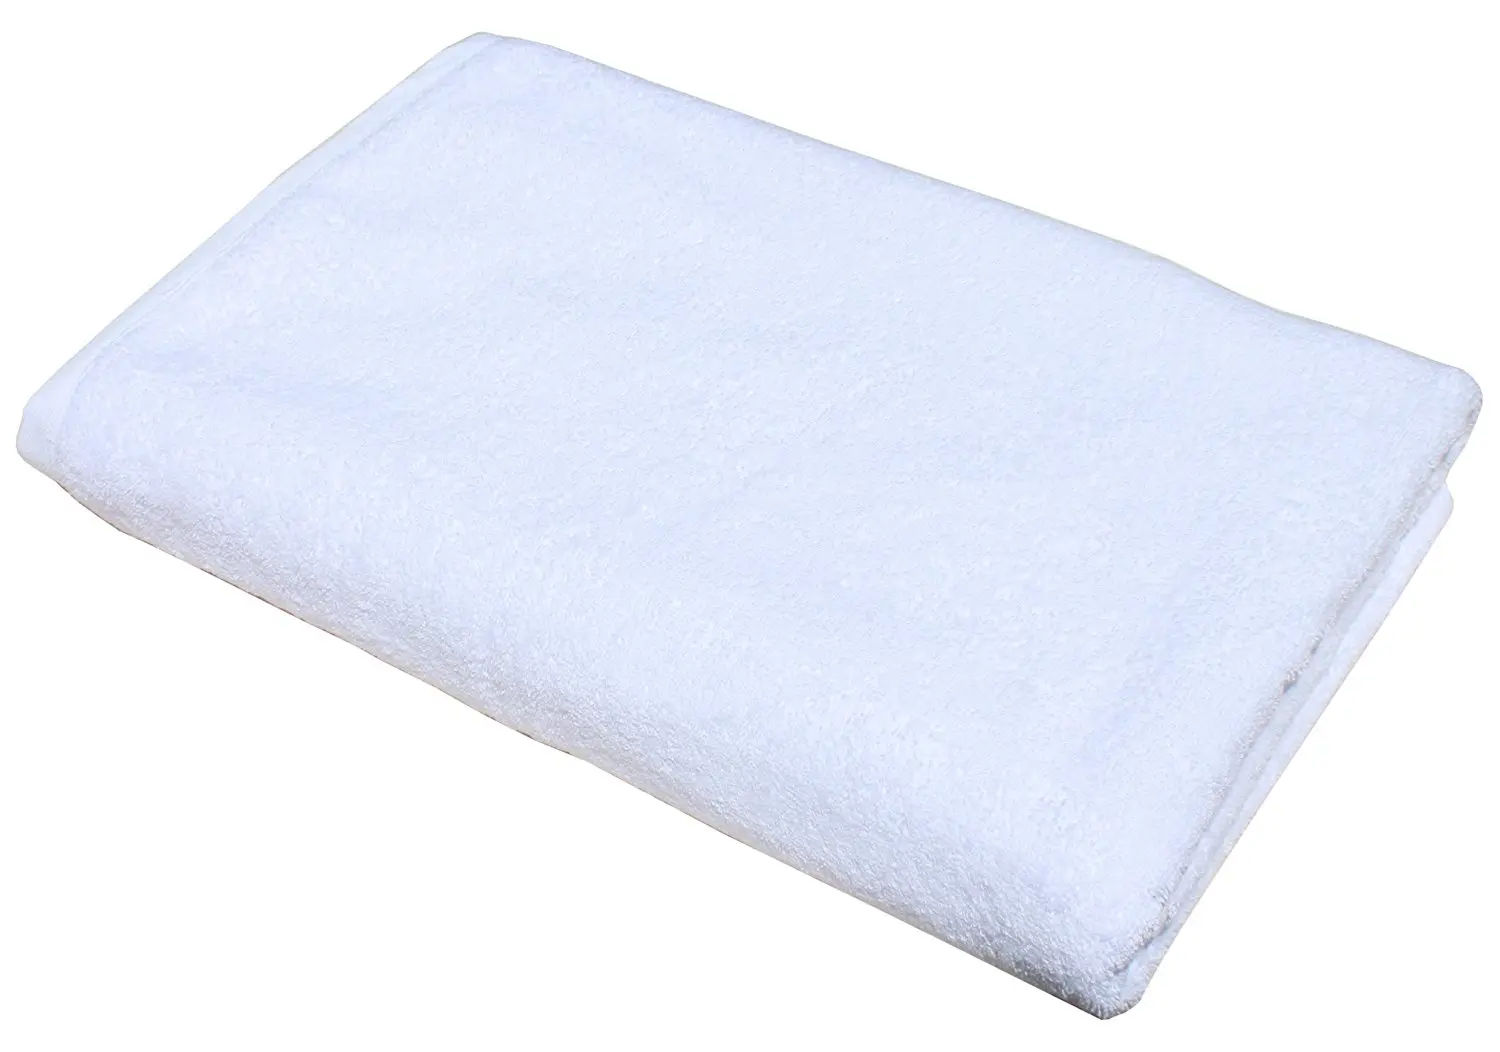 Сколько весит полотенце. Вес банного полотенца. Полотенце весит. Вес полотенца для тела. Полотенце весит с боку.